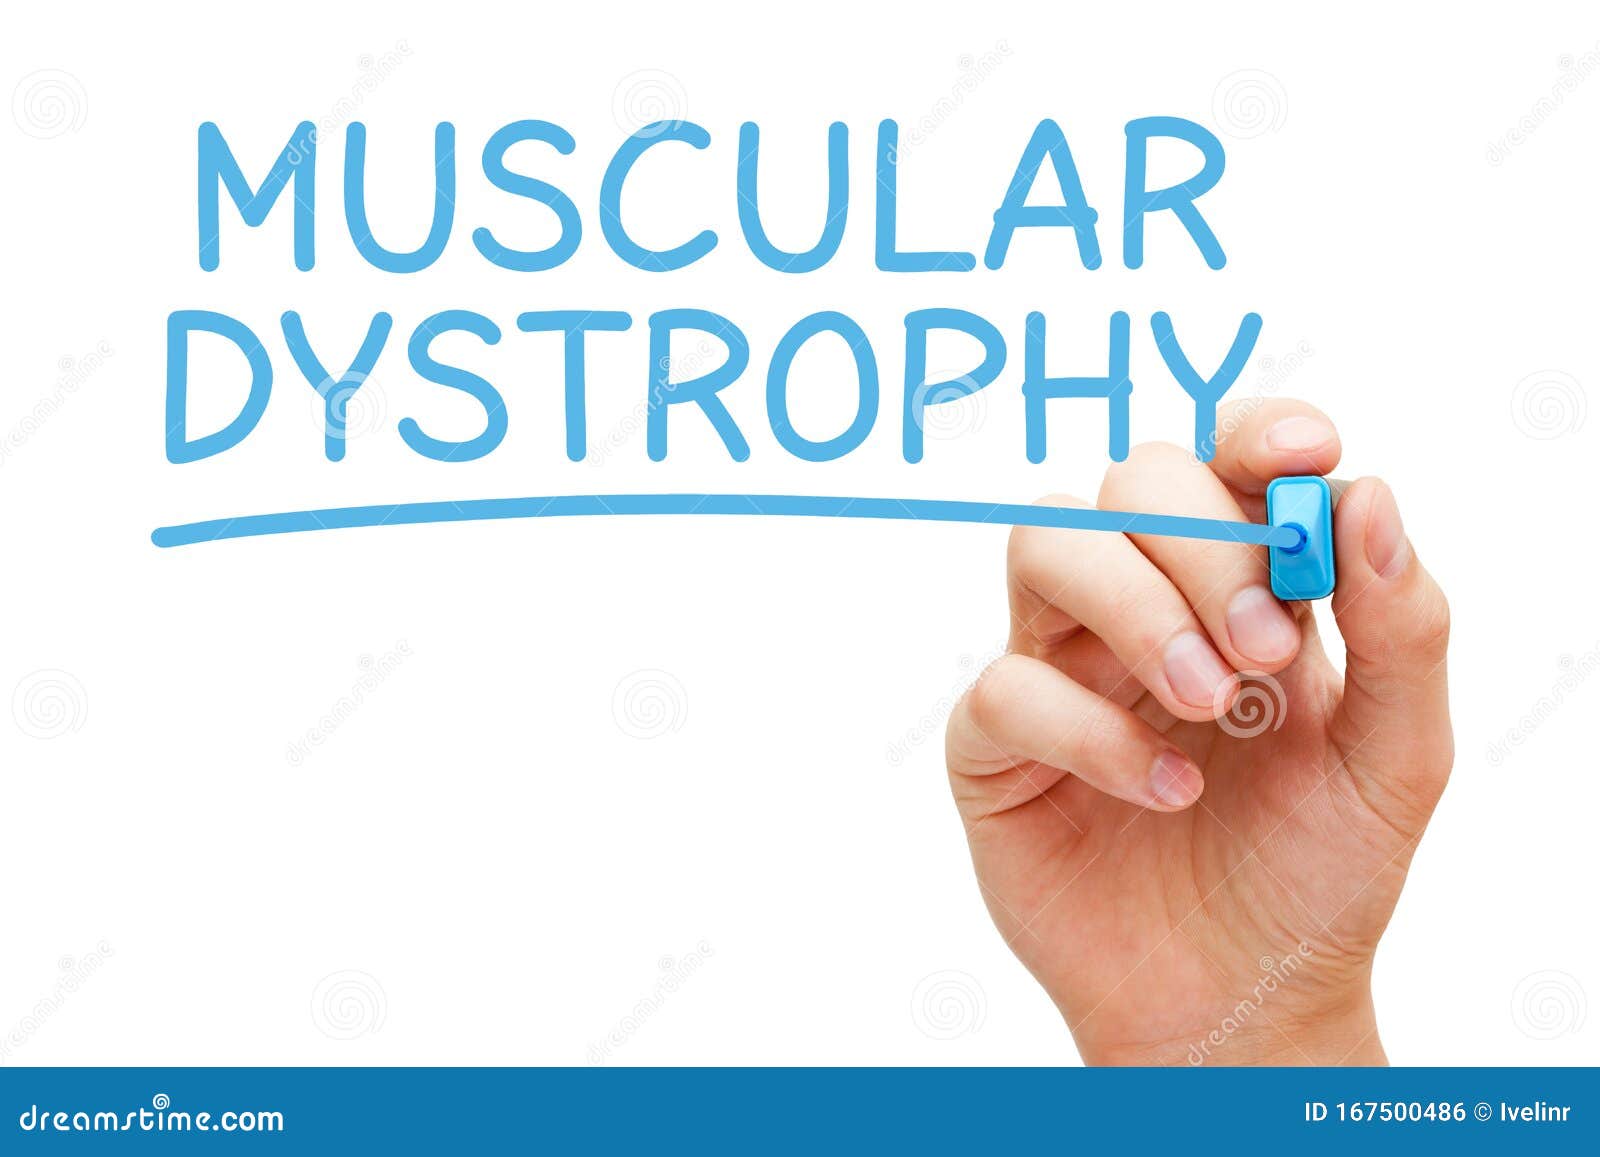 muscular dystrophy handwritten with blue marker